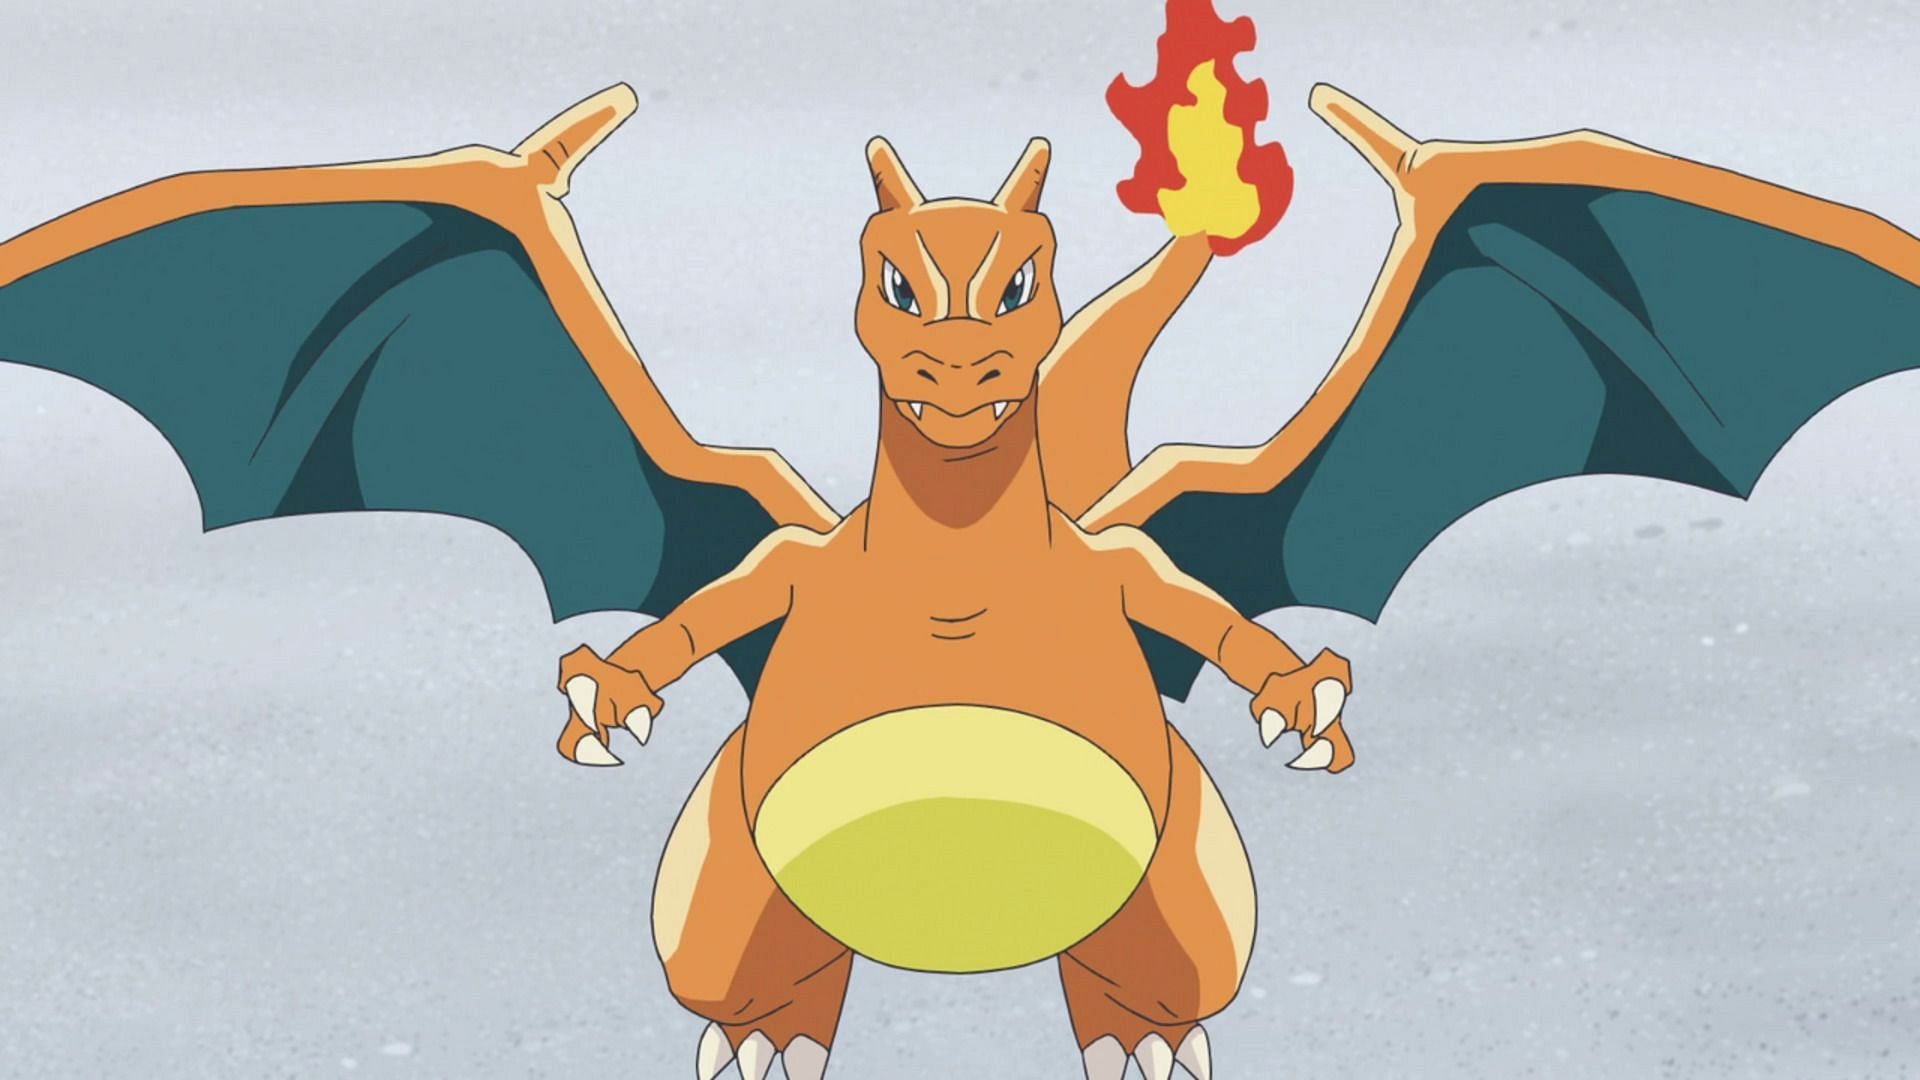 Charizard as seen in the anime (Image via The Pokemon Company)